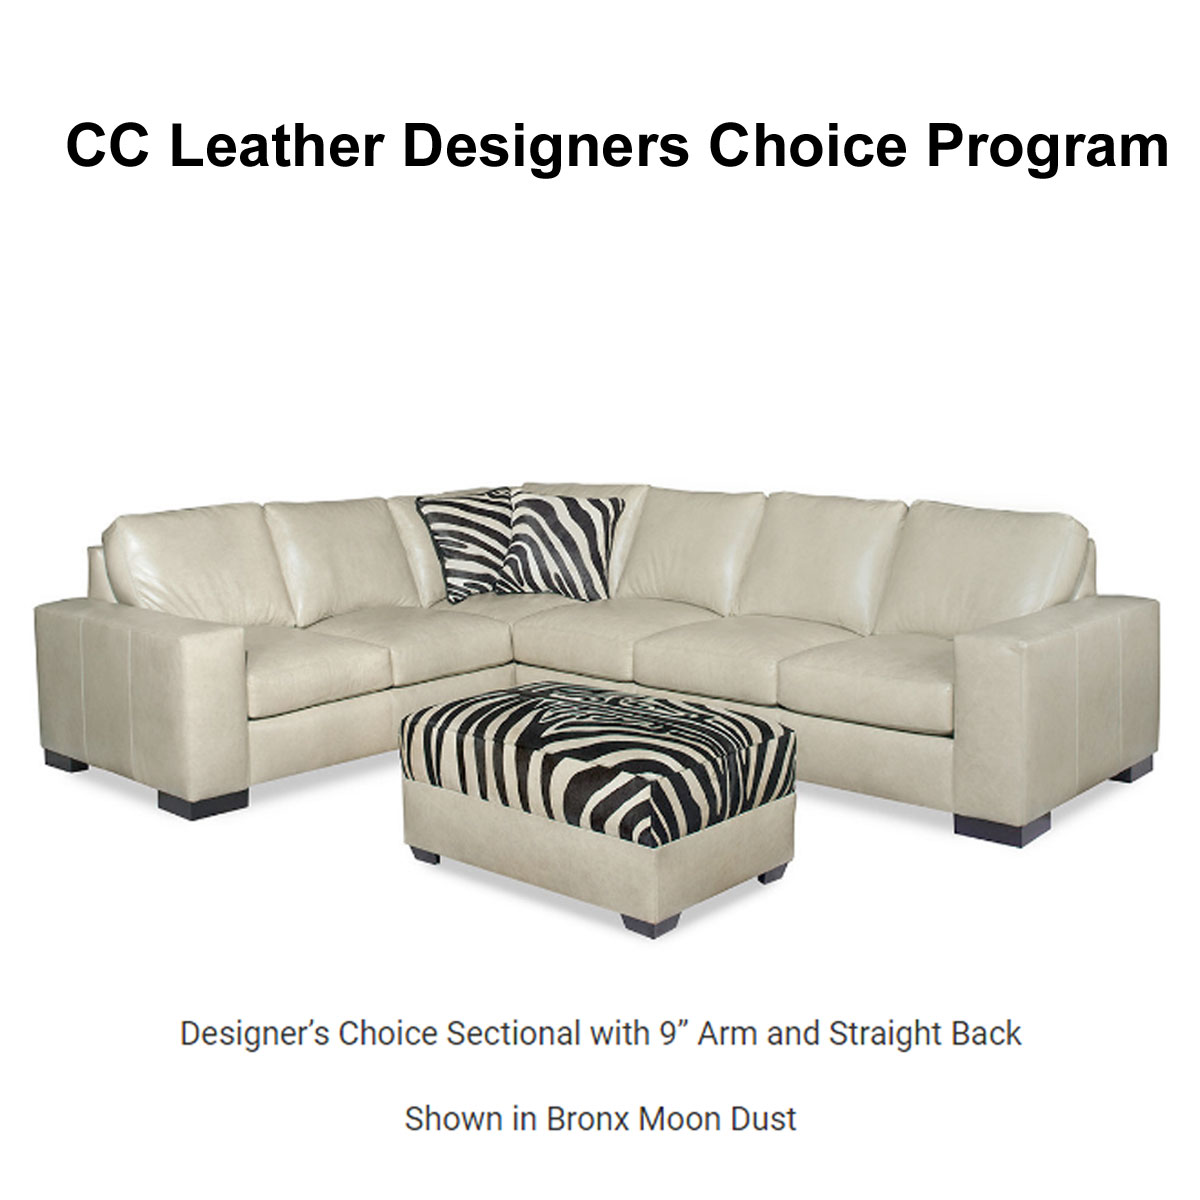   Carolina Custom Leather Designers Choice Program